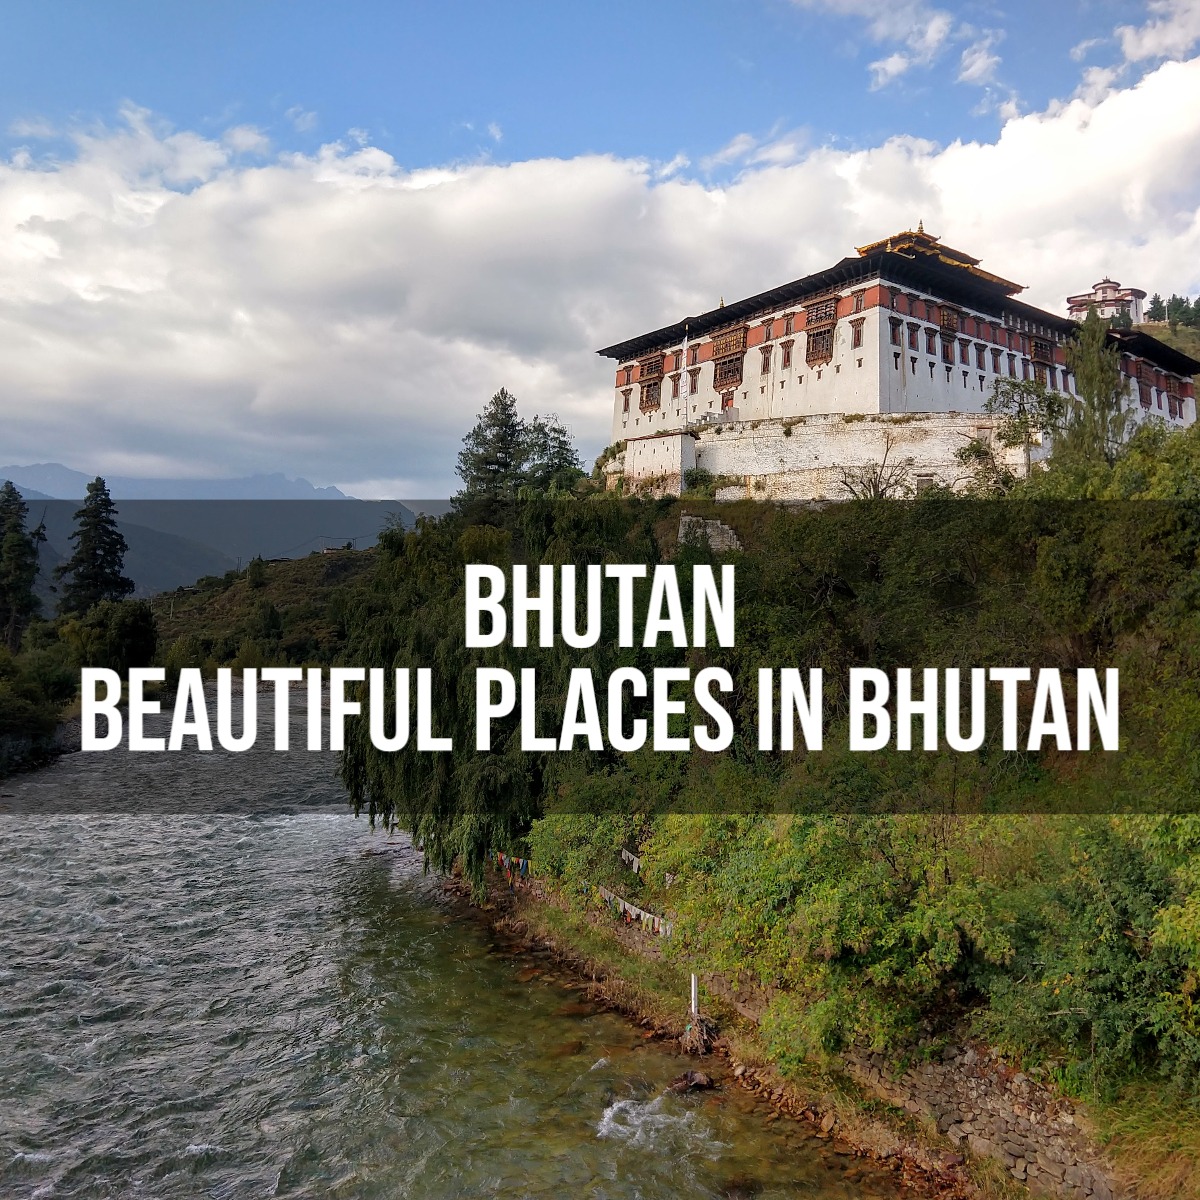 Bhutan beautiful places in Bhutan photos photography buildings architecture